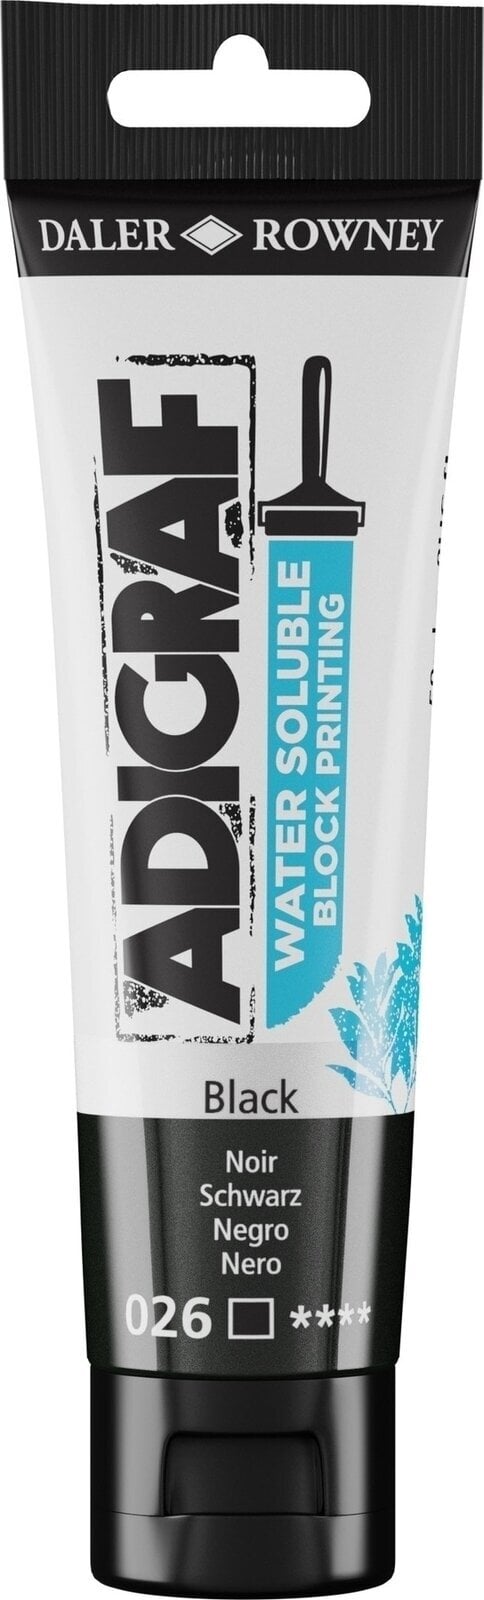 Vernice per linoleografia Daler Rowney Adigraf Block Printing Water Soluble Colour Vernice per linoleografia Black 59 ml